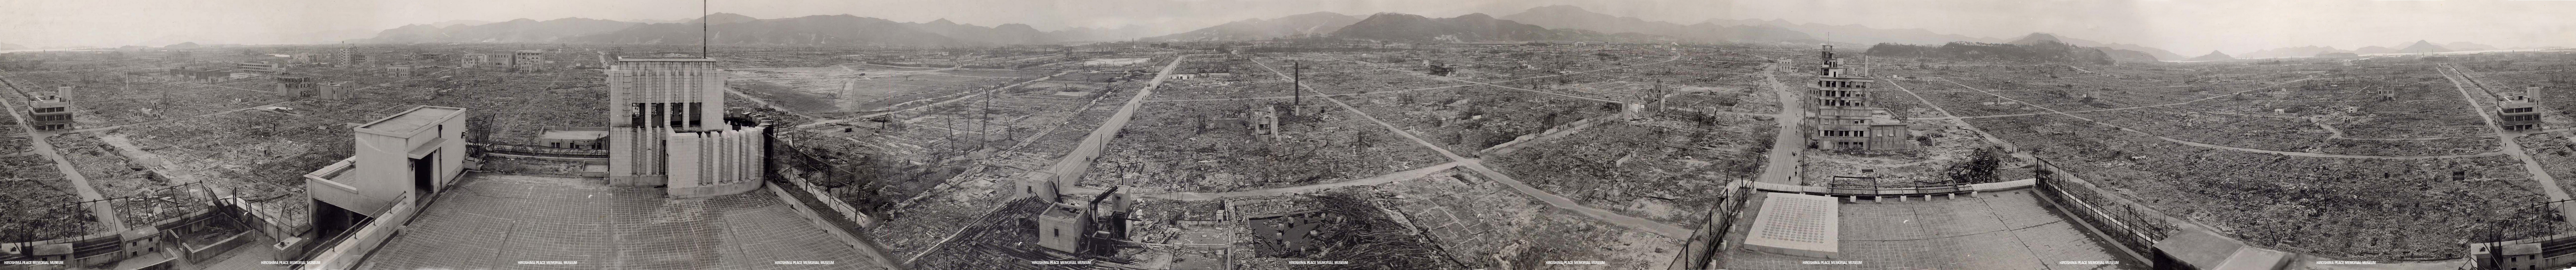 Hiroshima Panorama Image No.2